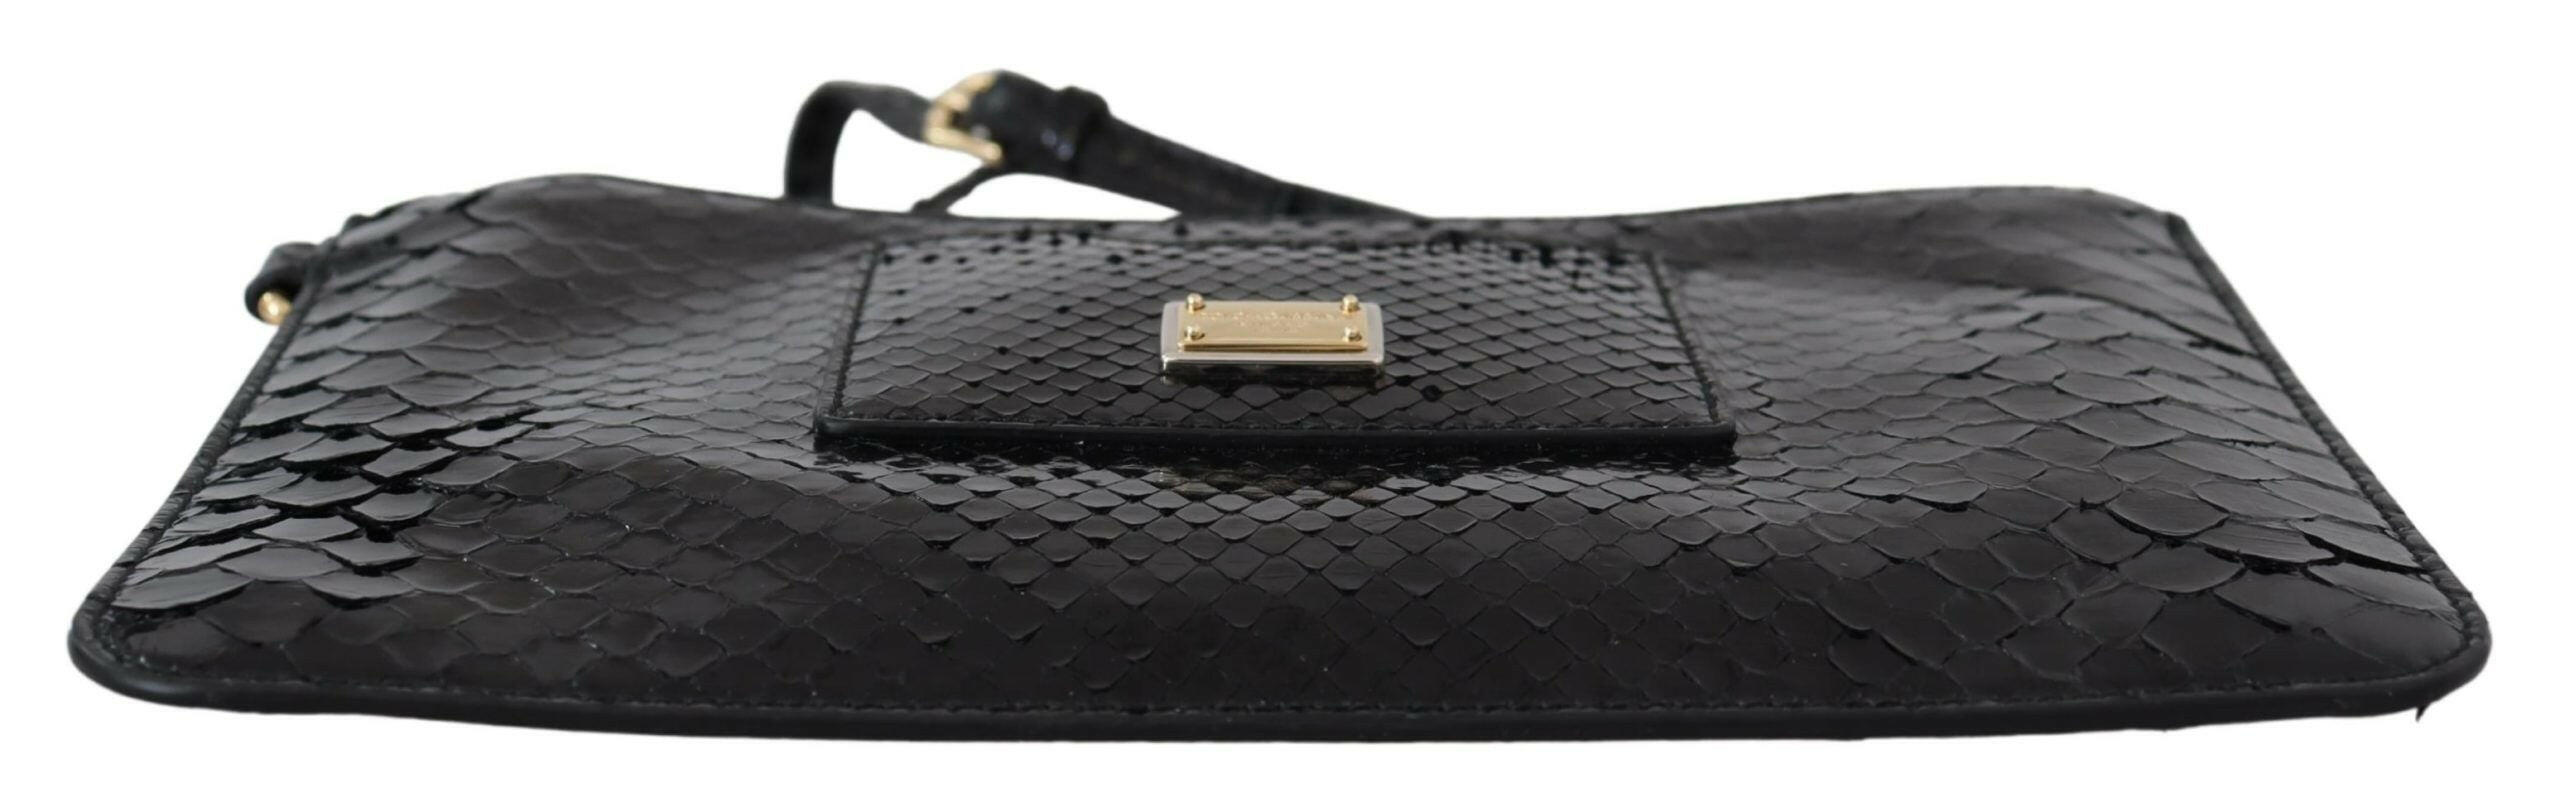 Dolce & Gabbana Black Leather Coin Purse Wristlet Mirror Agnese Wallet - GENUINE AUTHENTIC BRAND LLC  